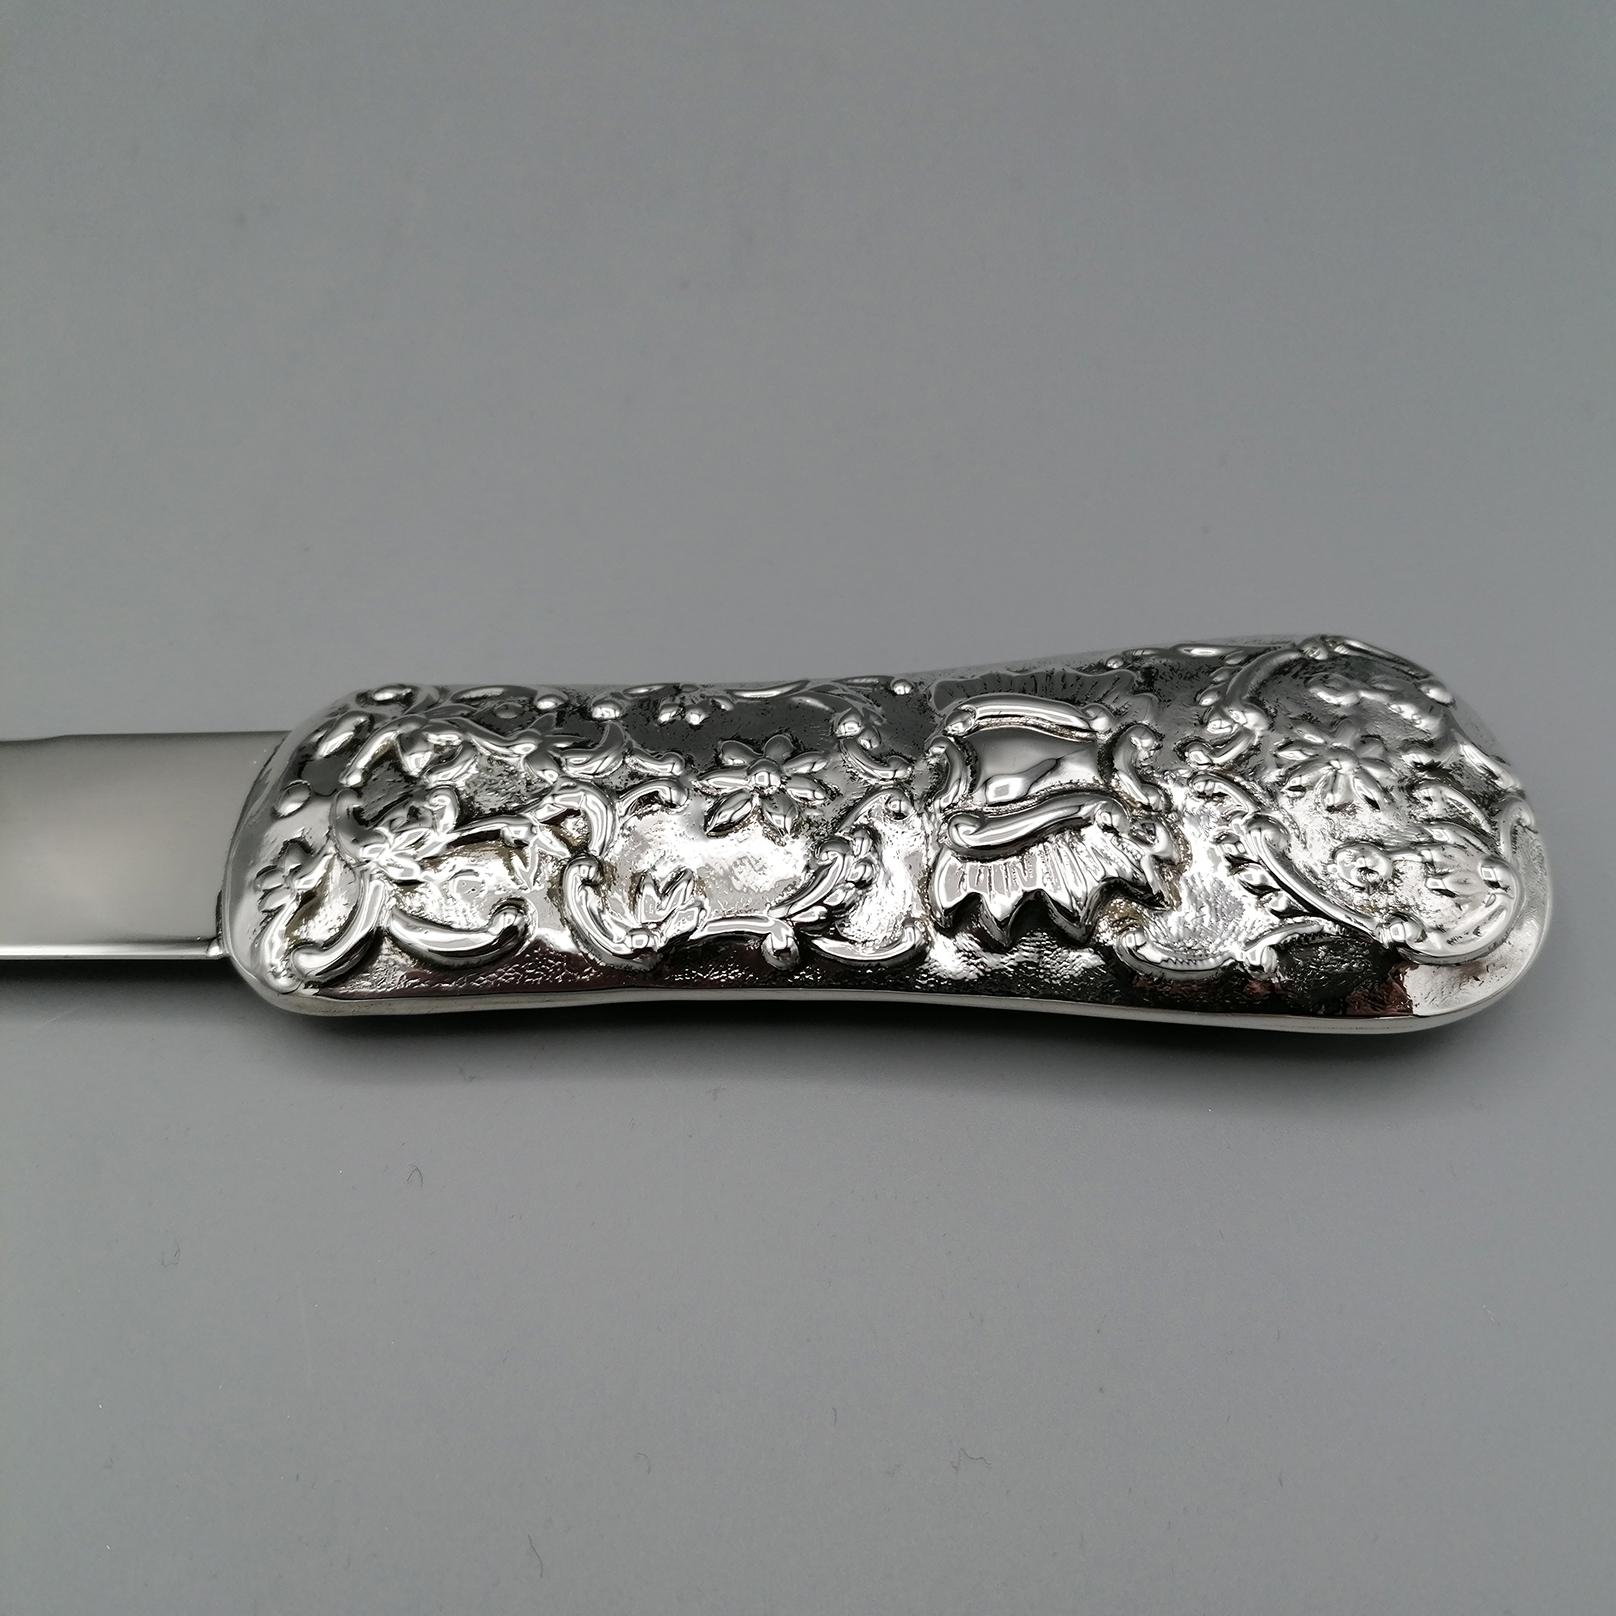 Hallmark Vintage Sterling Silver 925 Italian Made Long Bookmark Letter Opener 